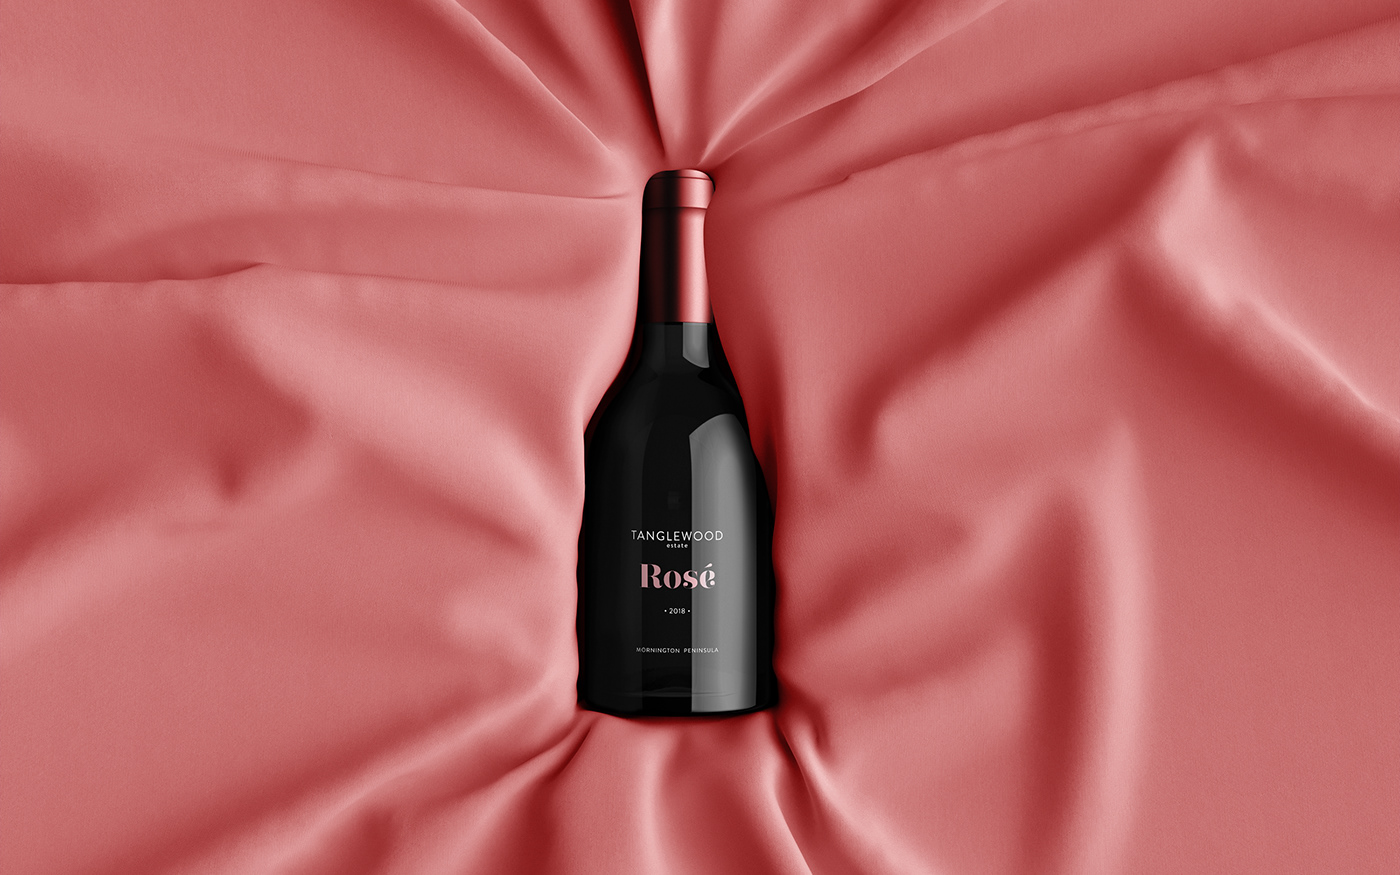 Tanglewood Estate:  "Rosè" wine bottle.